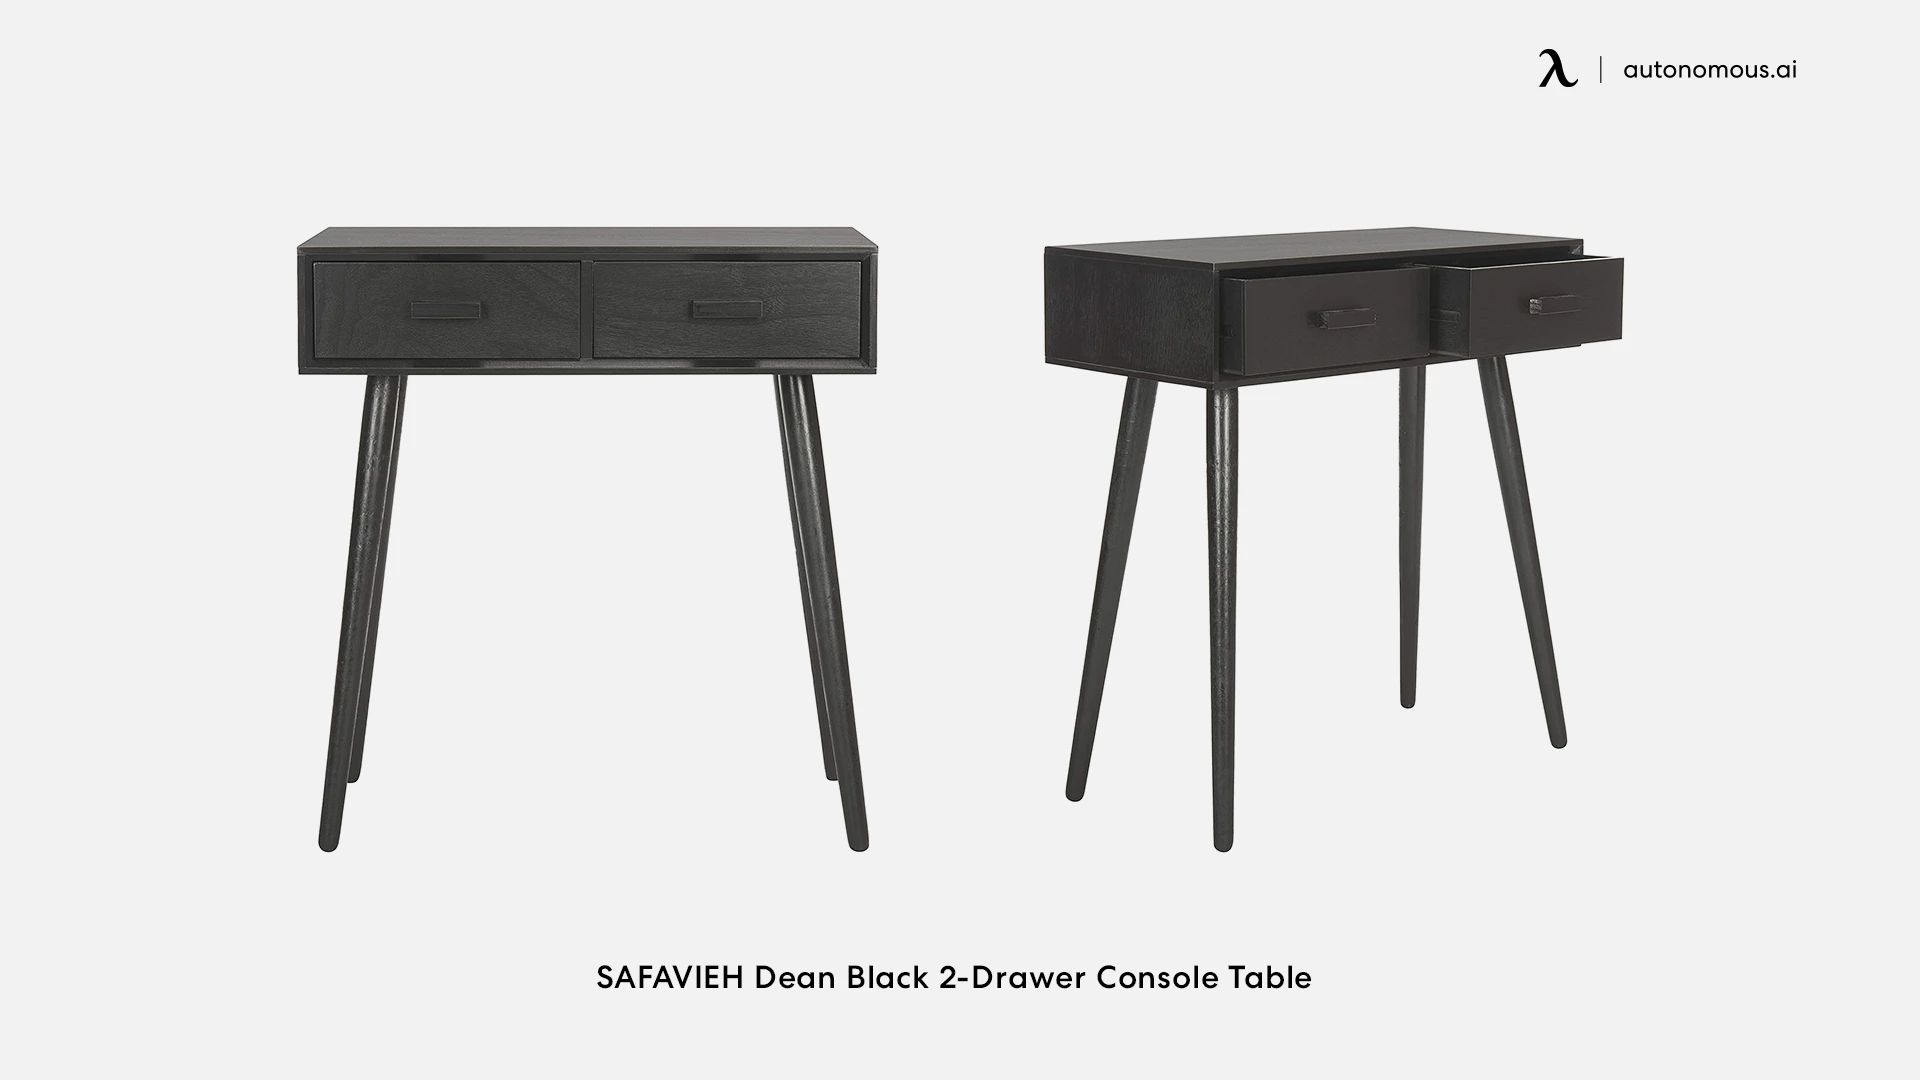 SAFAVIEH Dean Black 2-Drawer Console Table